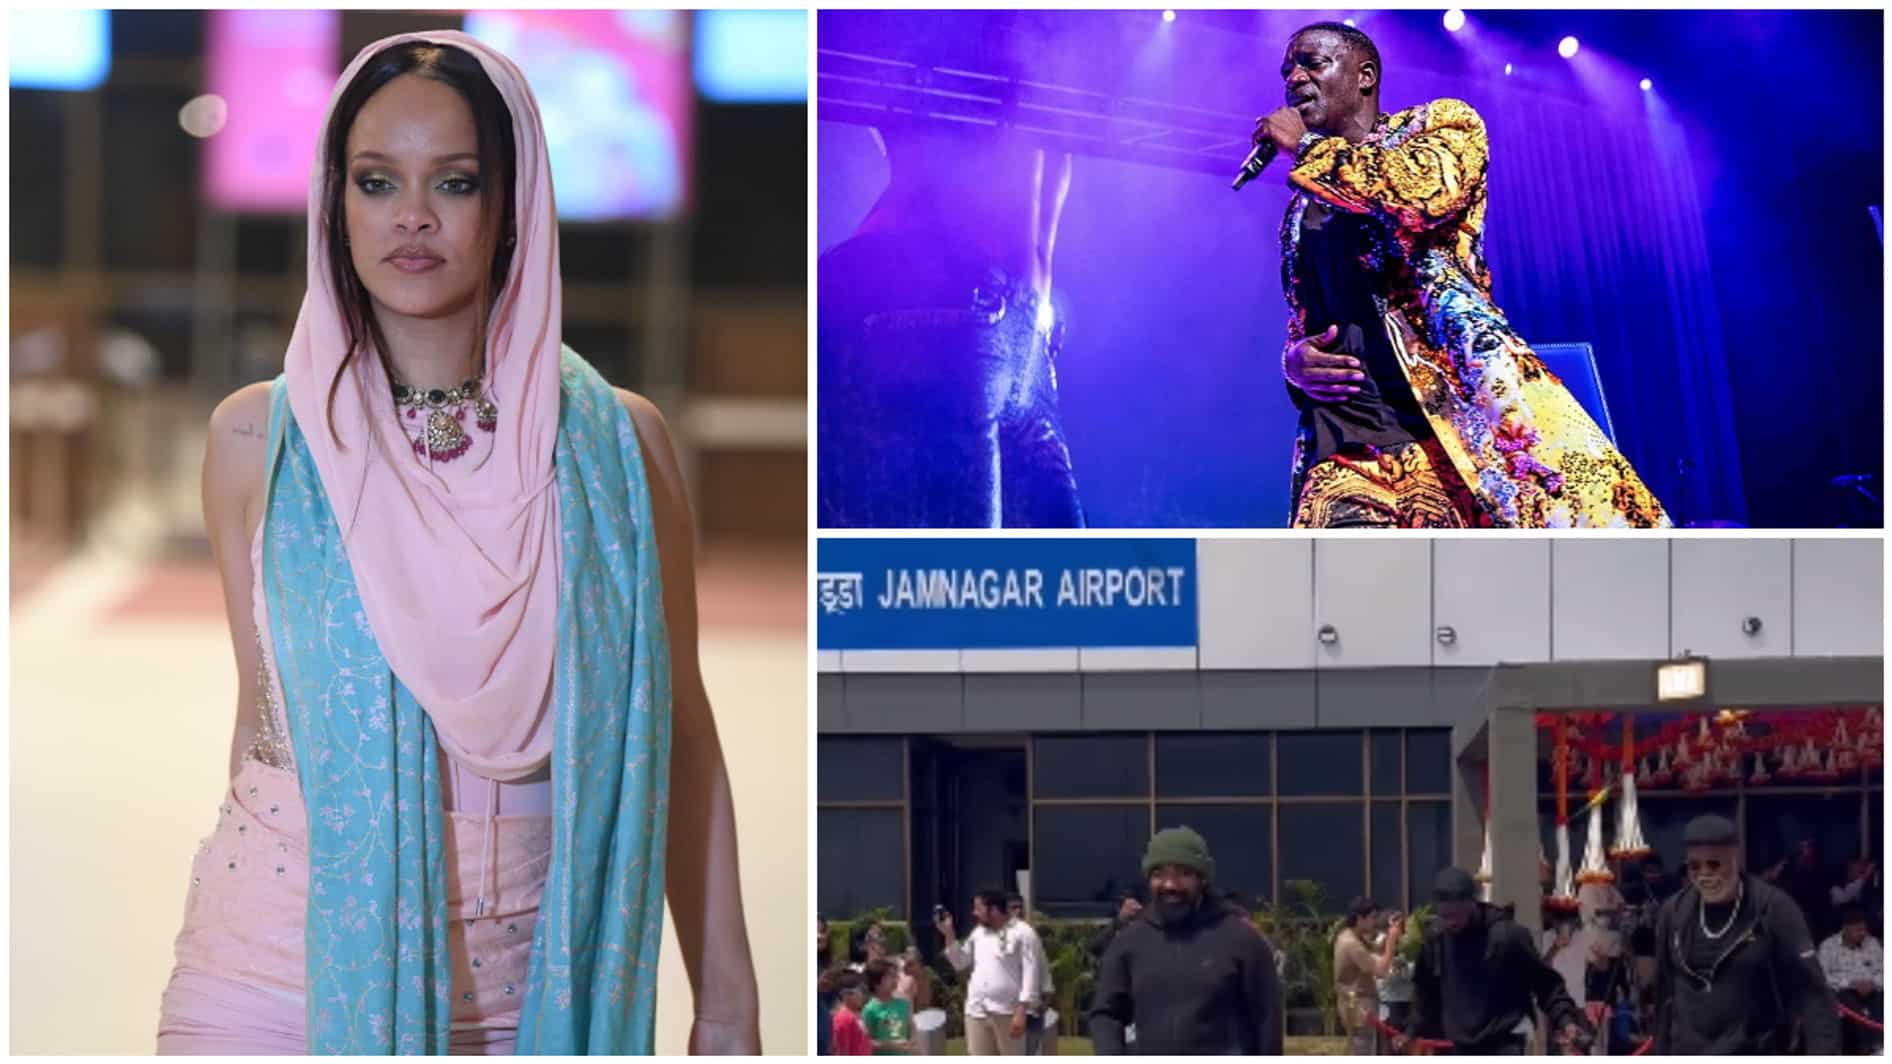 https://www.mobilemasala.com/film-gossip/Hours-after-Rihanna-left-India-American-singer-Akons-team-spotted-in-Jamnagar---Netizens-sing-SRKs-Chammak-Challo-i220051